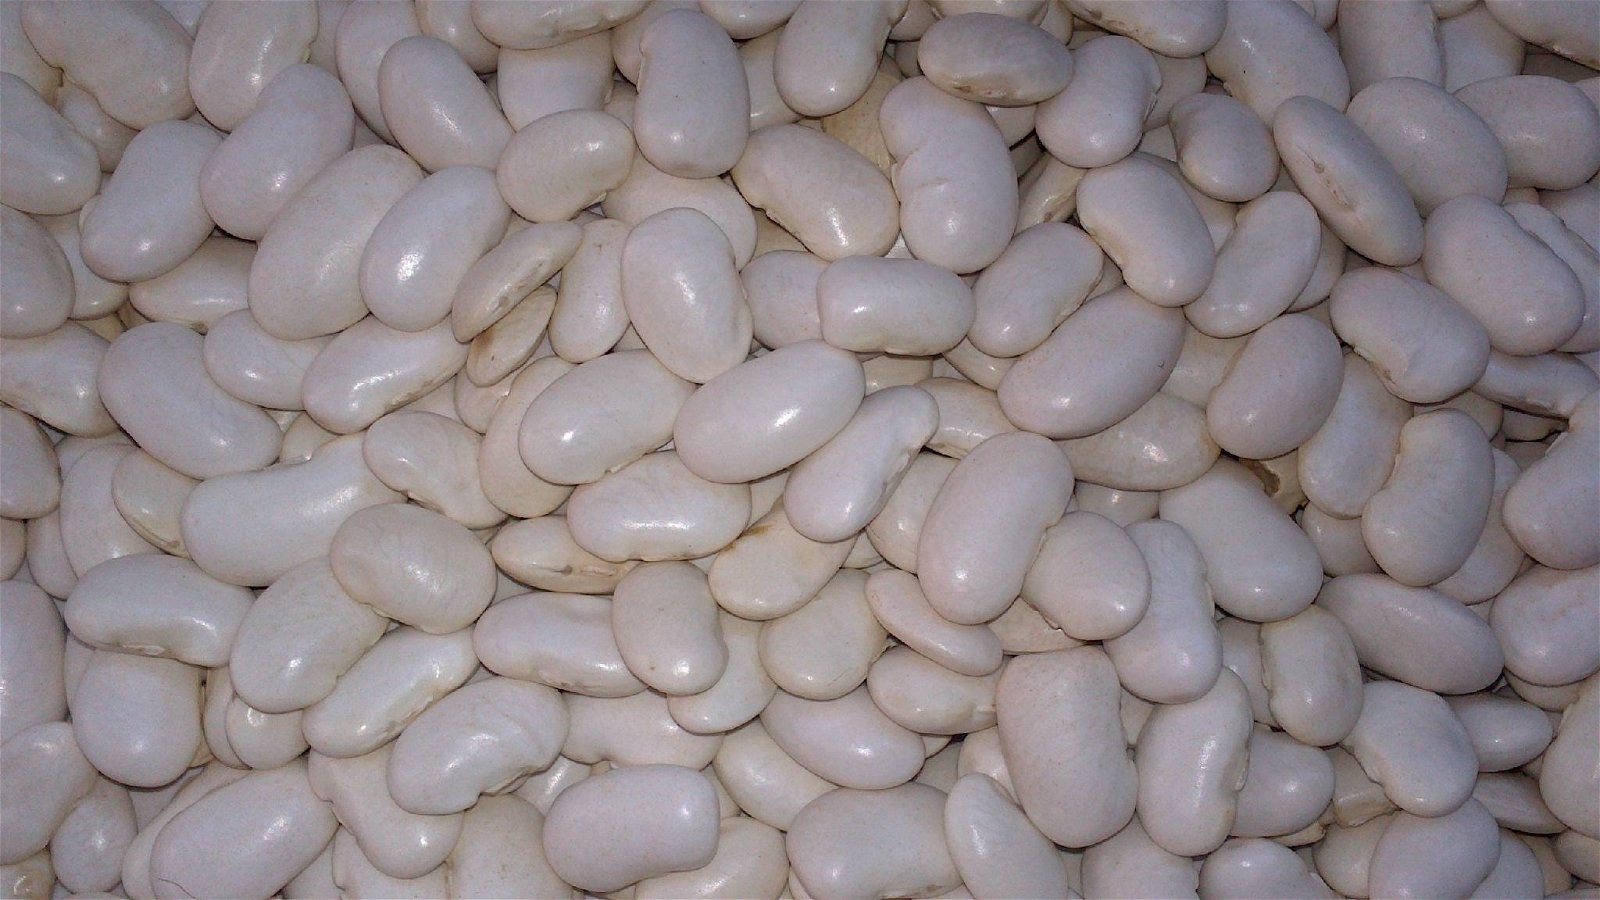 Navy Haricot White Pea White Kidney Cannellini Bean